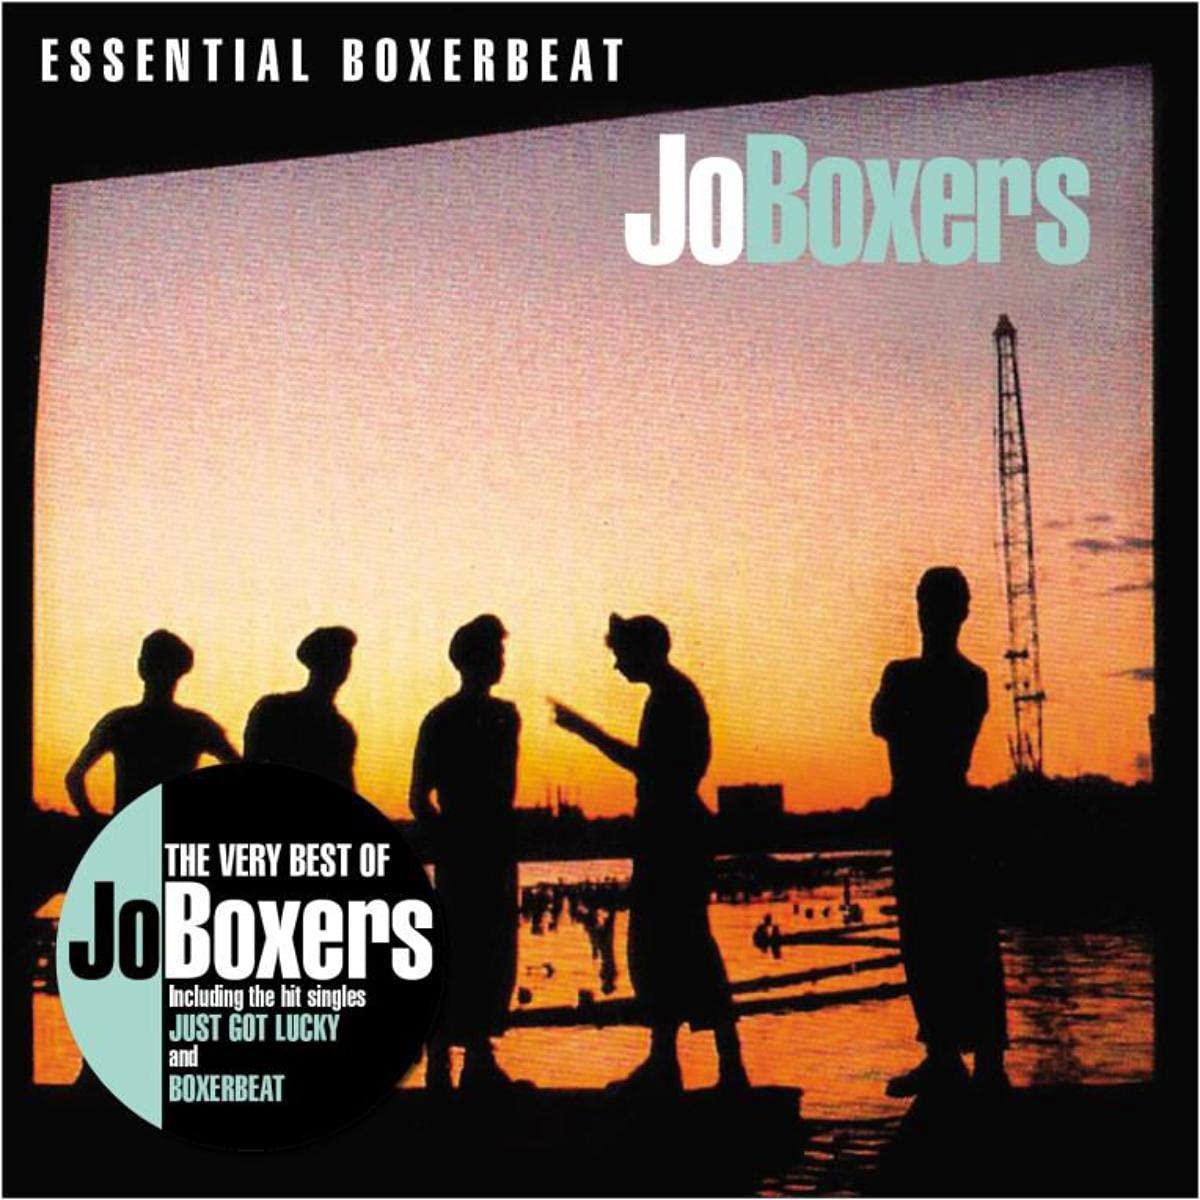 Joboxers - Essential - (CD) Boxerbeat (Reissue)